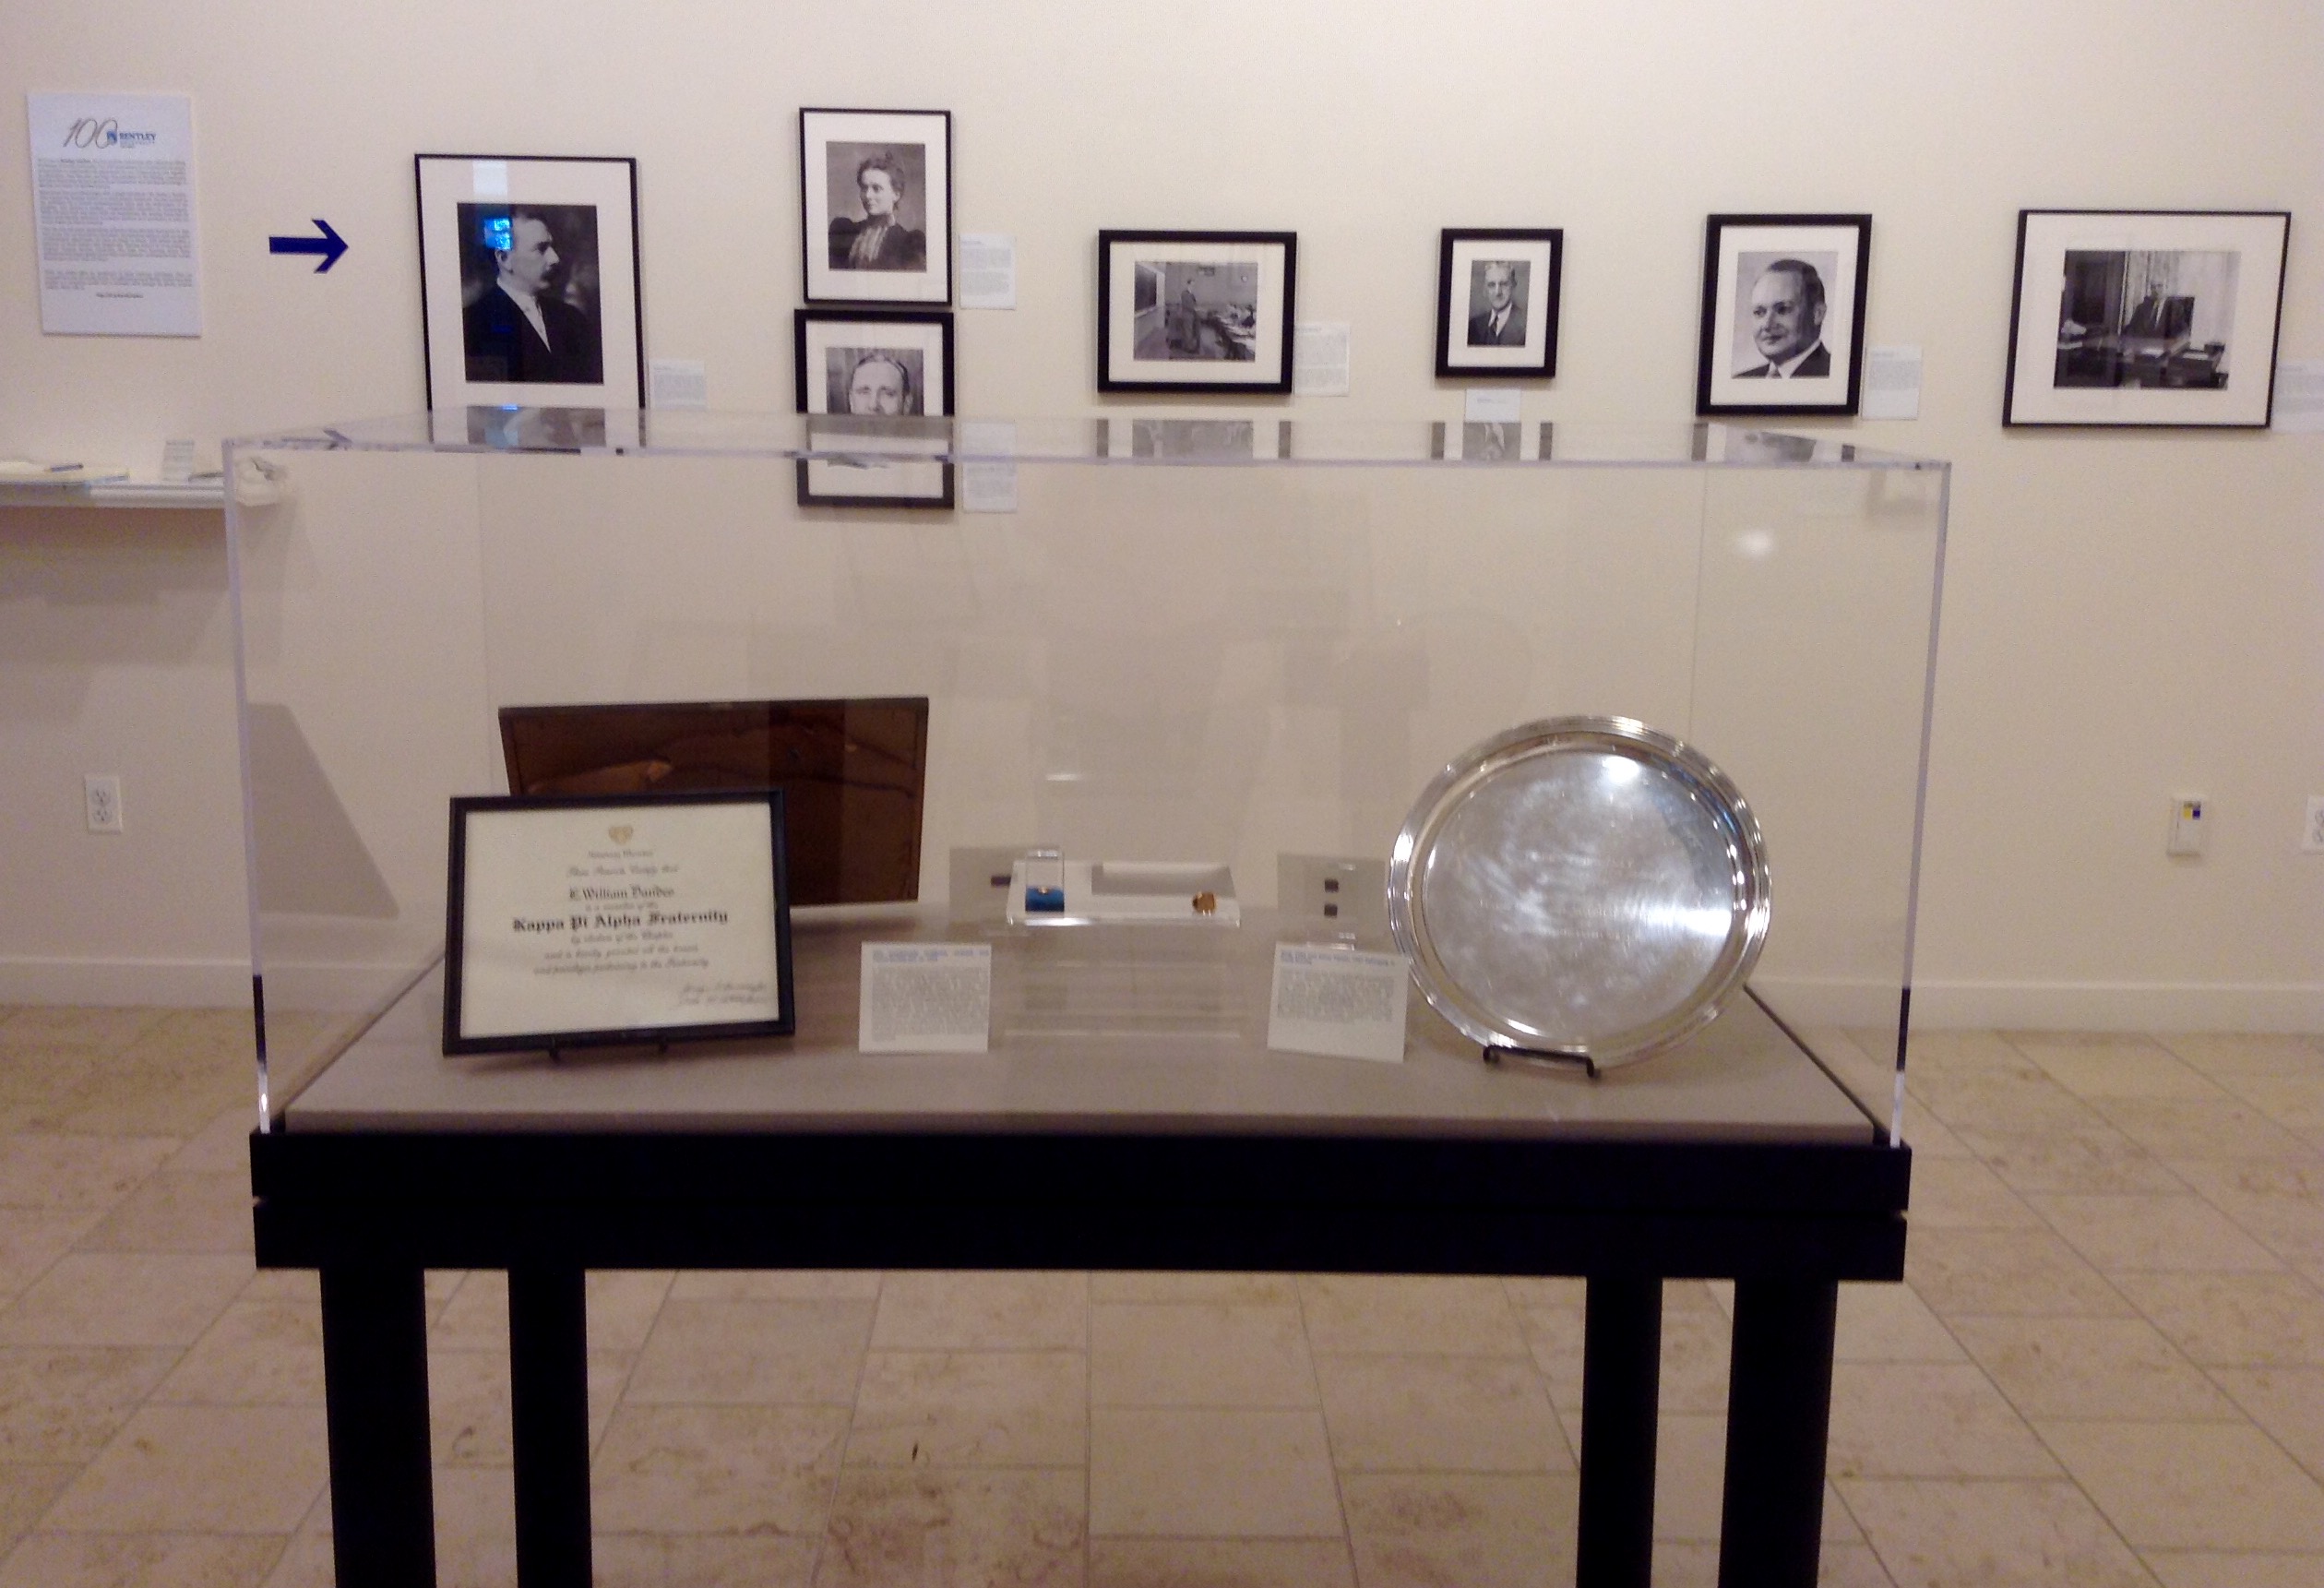 display case of historical memorabilia in the art gallery 